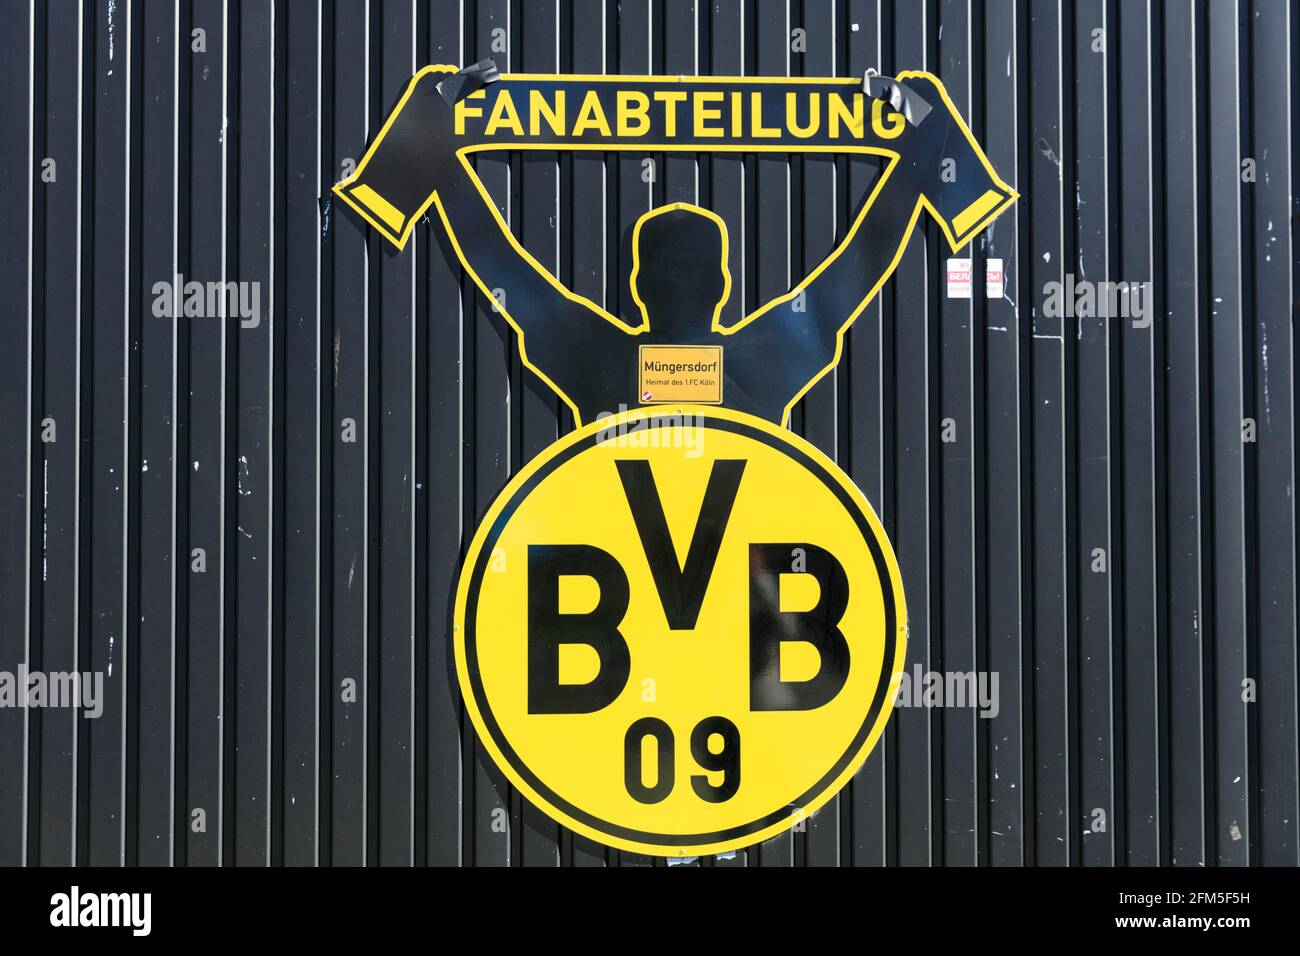 BVB 09 Borussia Dortmund football club logo, Fanabteilung at Signal Iduna Park Borussia Dortmund stadium, Germany Stock Photo